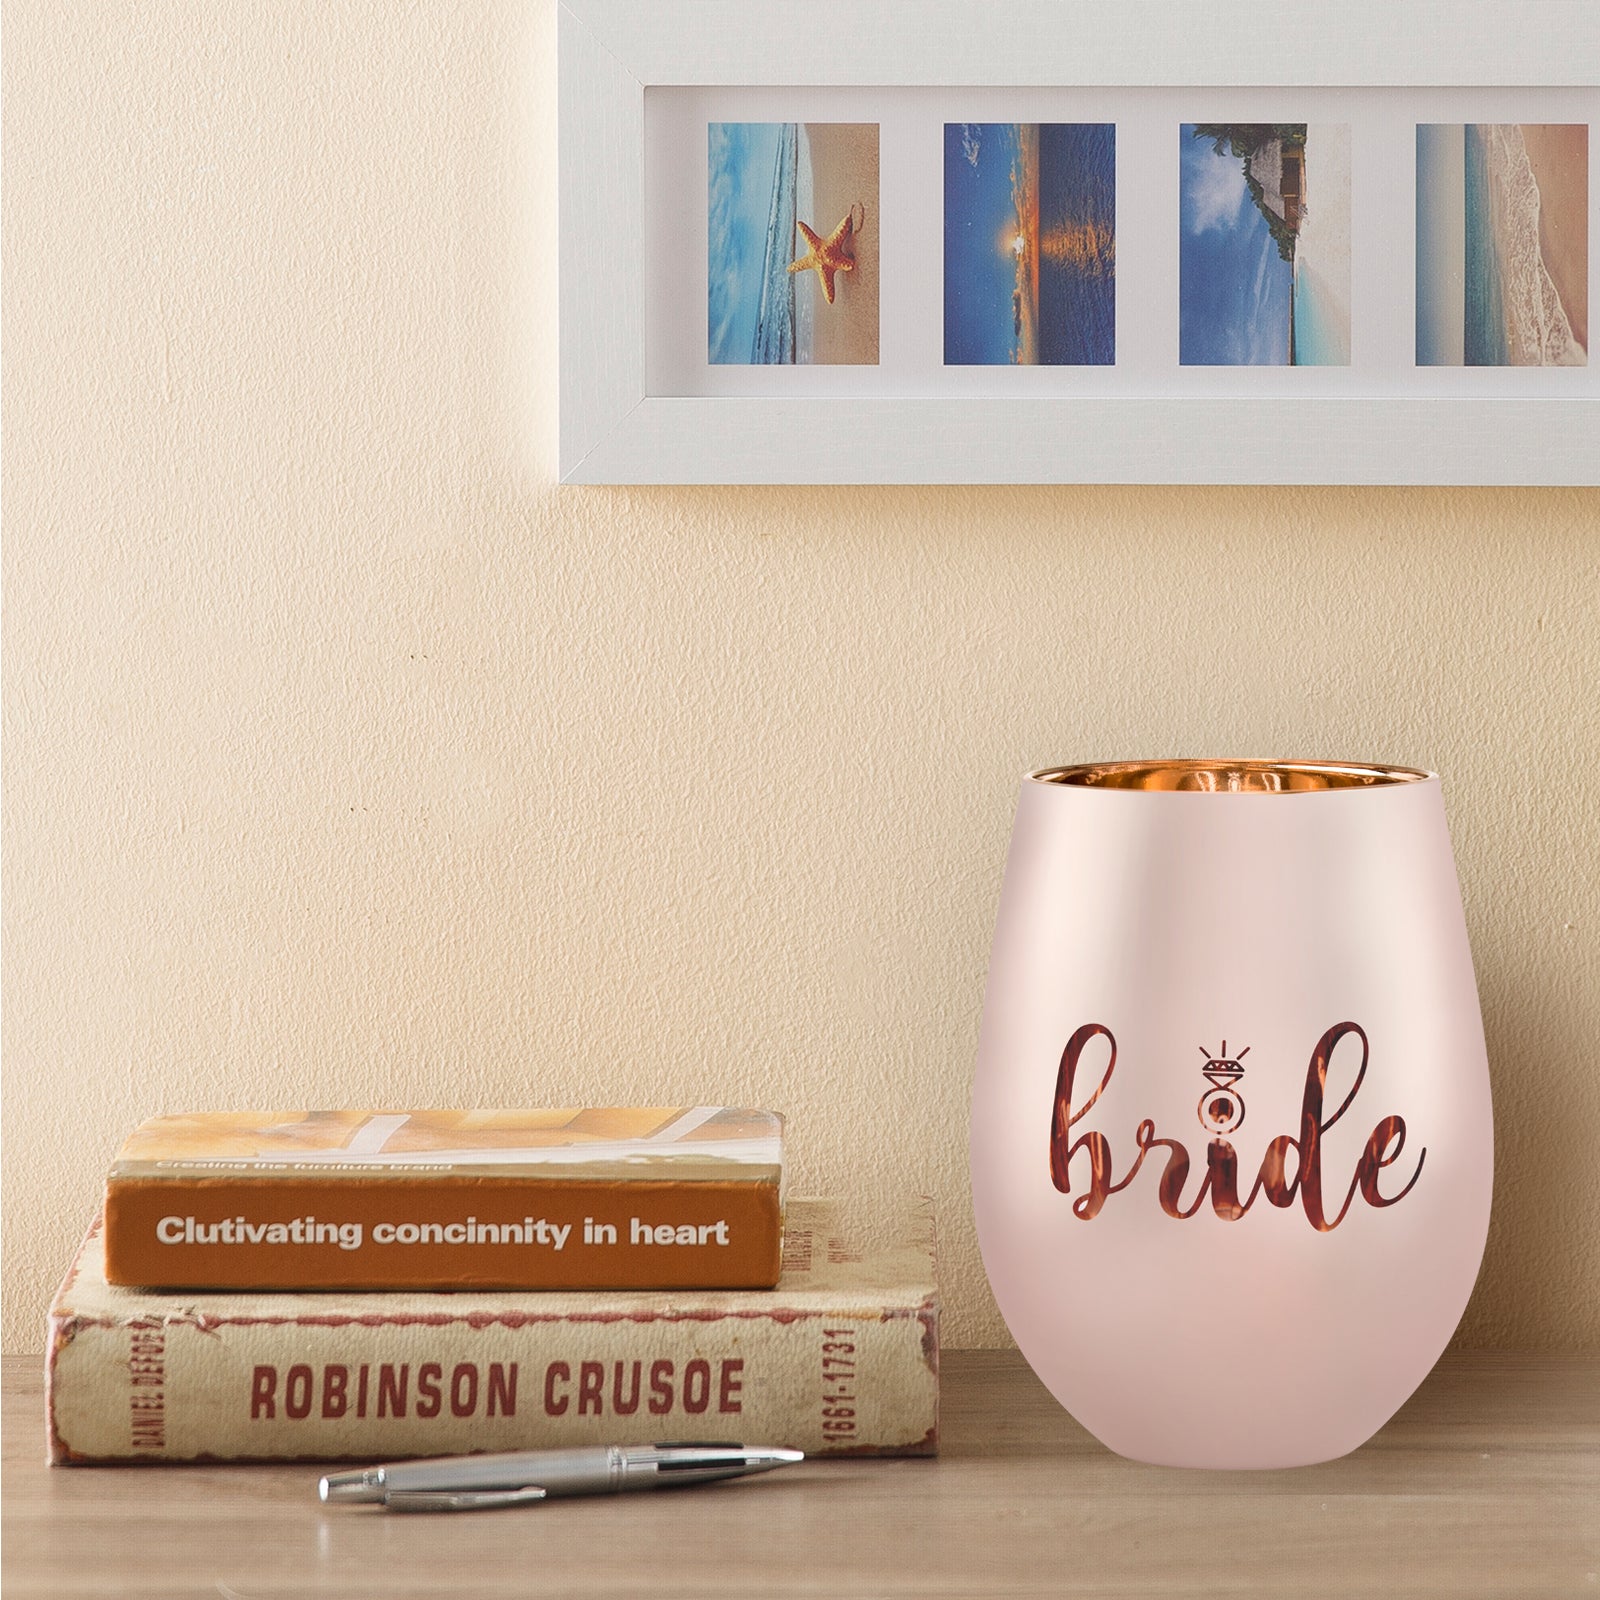 homeconlin Bride Gifts - Bridal Shower Gift - Bride Wine Glass